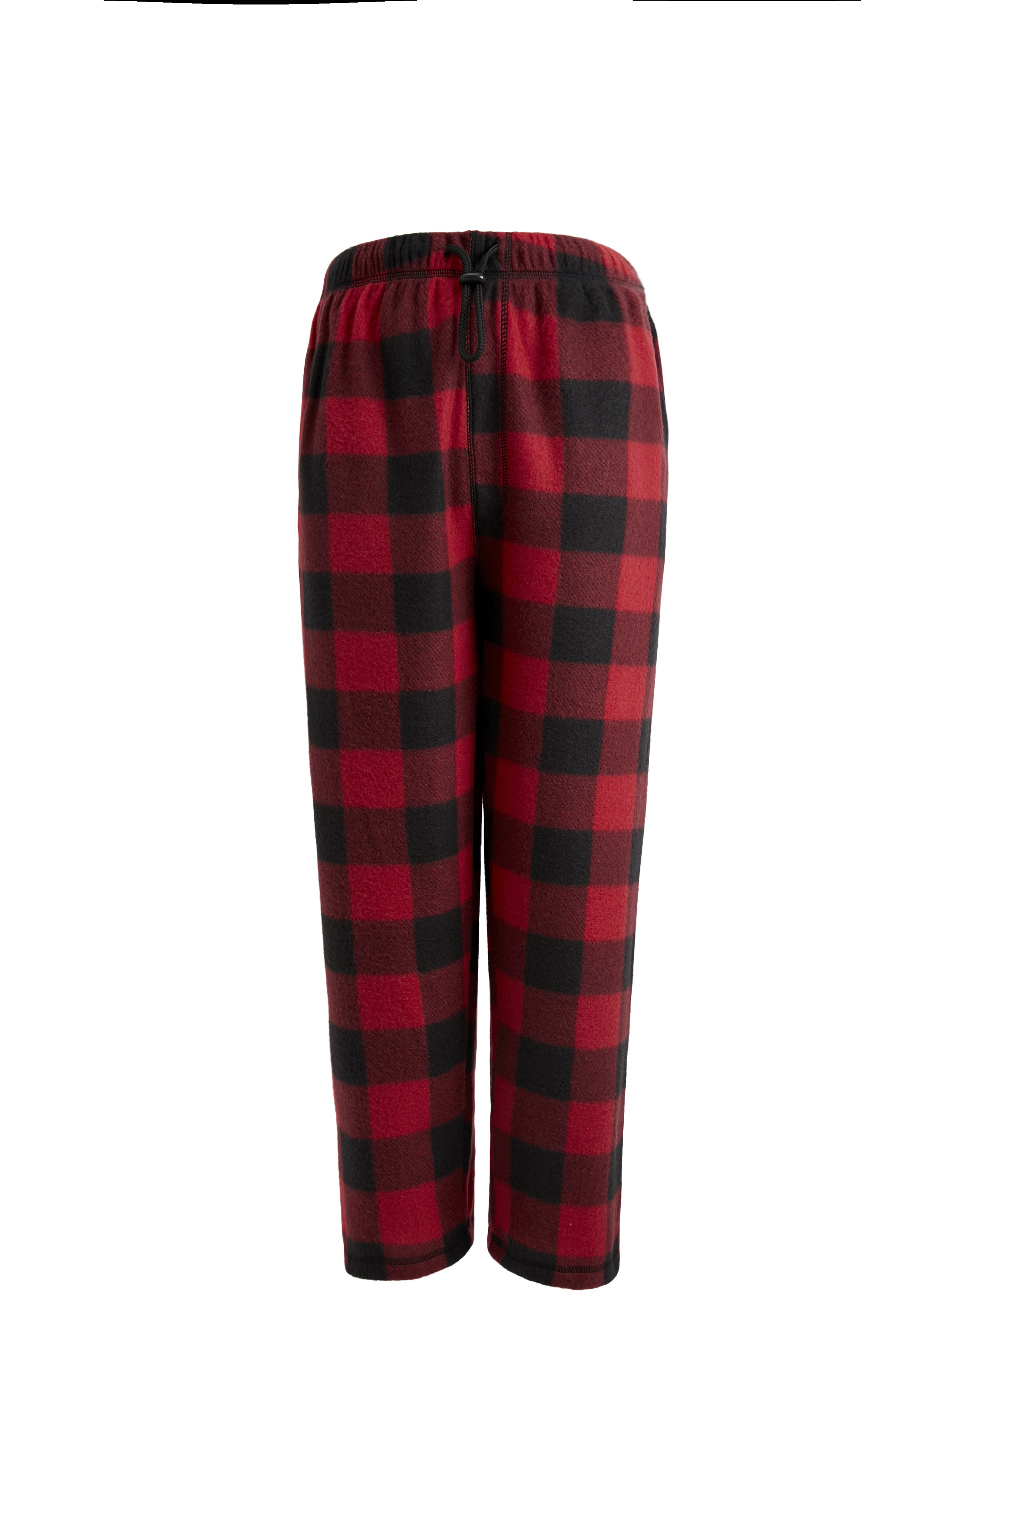 Men's Fleece Pajama Pants - 3X-5X, Red/Black Plaid